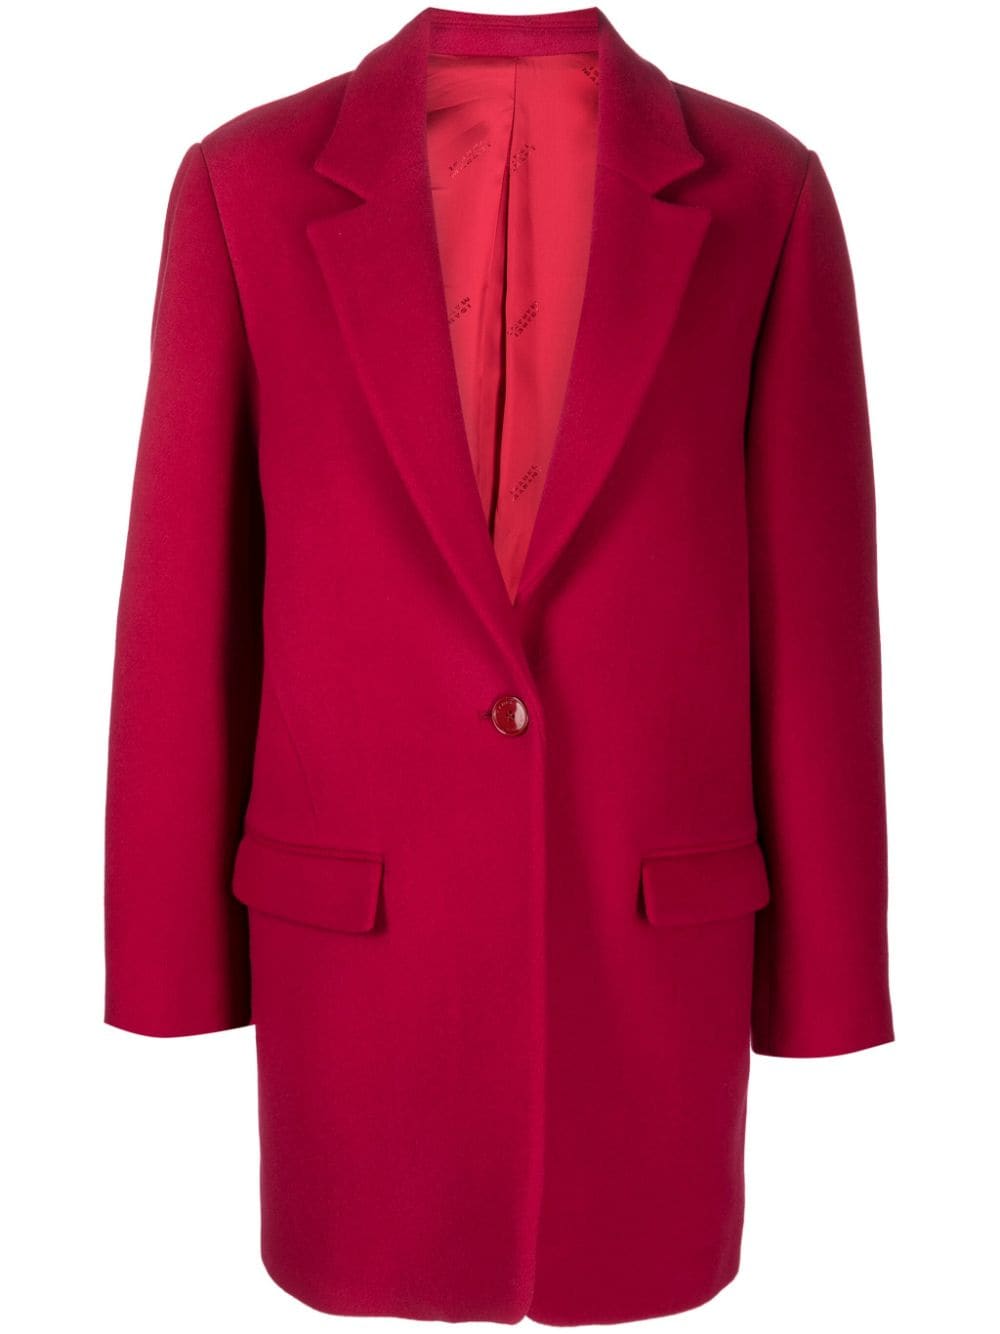 ISABEL MARANT Raspberry Pink Wool-Cashmere Blend Jacket - Women's Outerwear